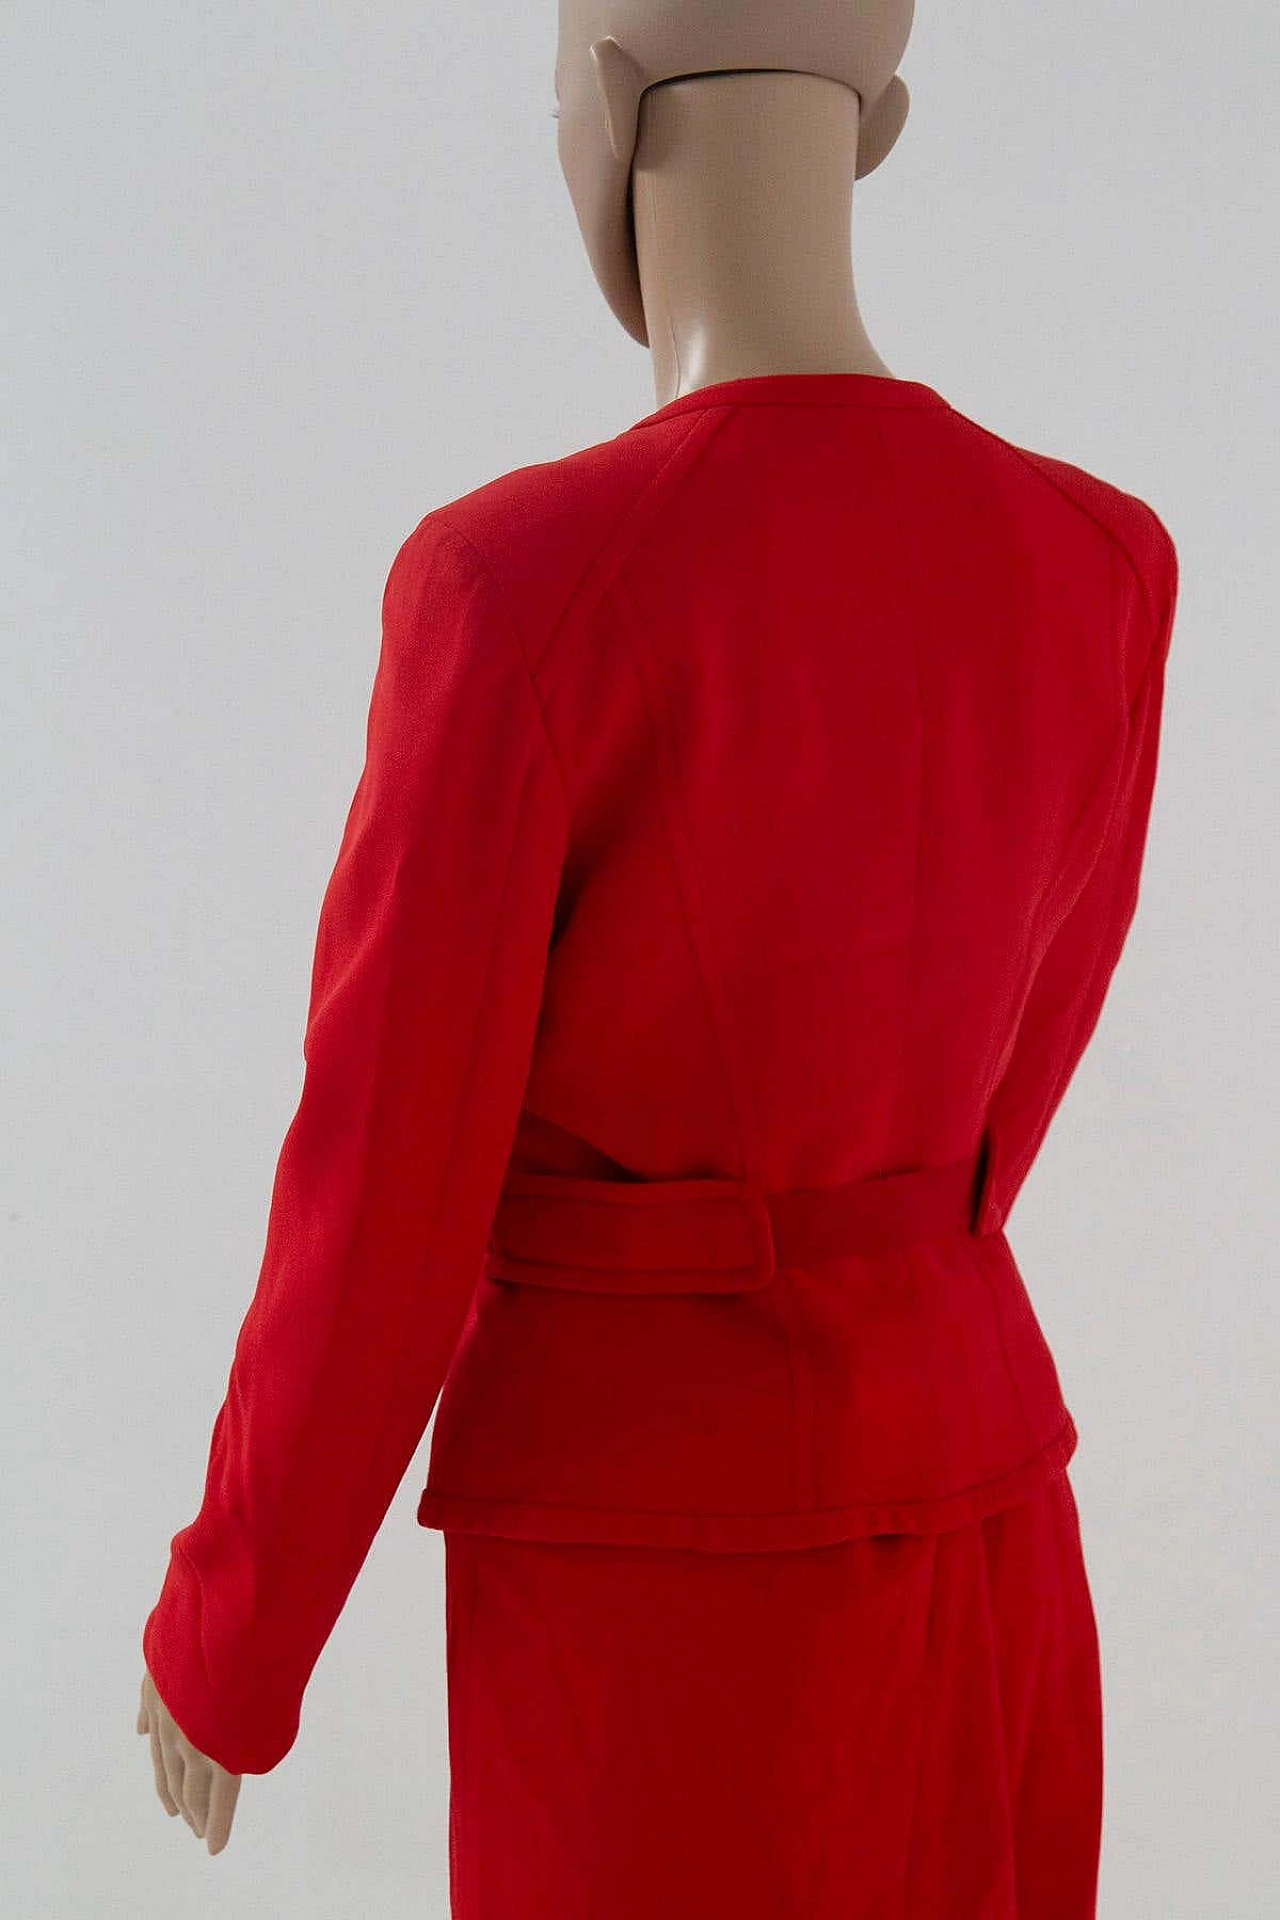 Red sheath dress by Valentino Garavani, 1990s 7